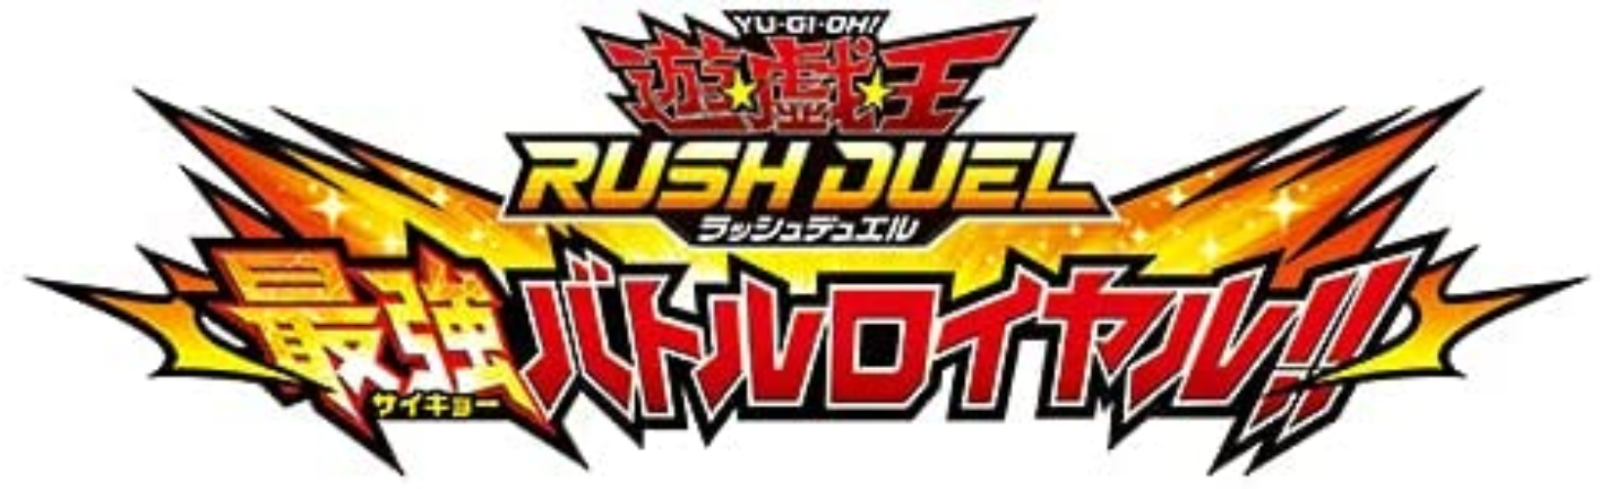 Nintendo Switch Yu-Gi-Oh! Rush Duel Battle más fuerte Battle Royale con 3cards Japón